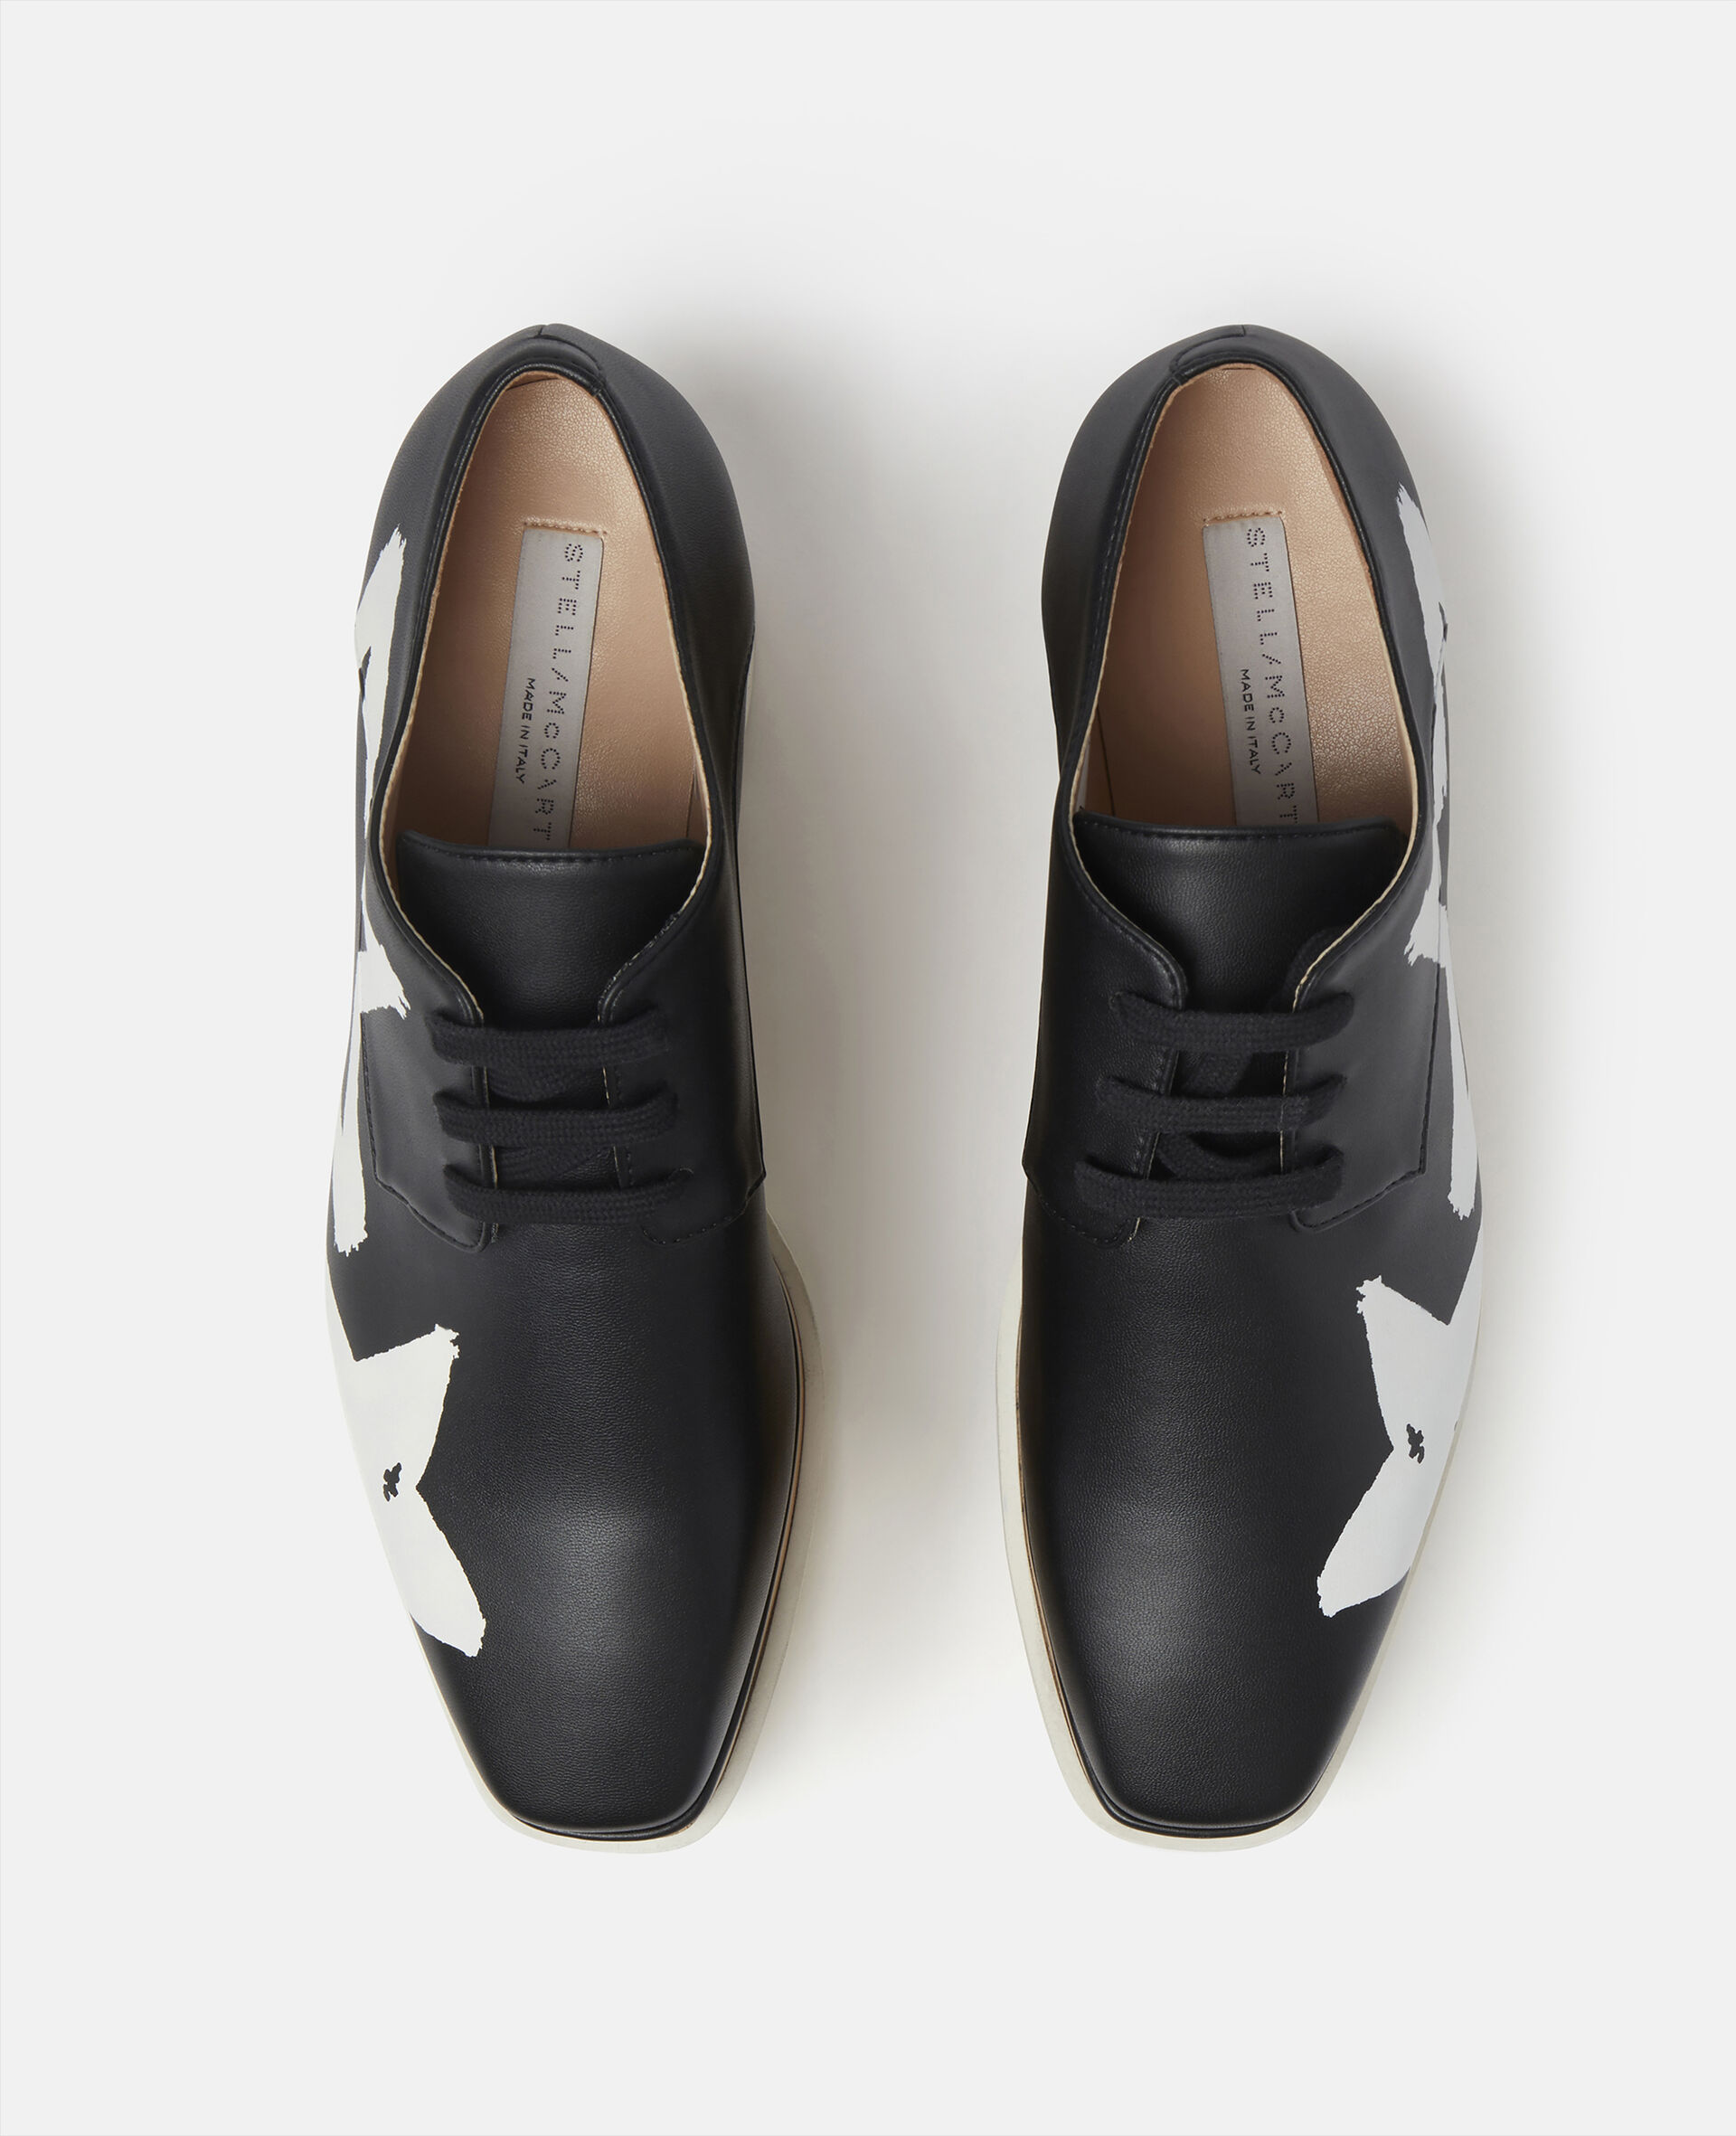 Elyse Painted Stars Platform Shoes-Black-large image number 3